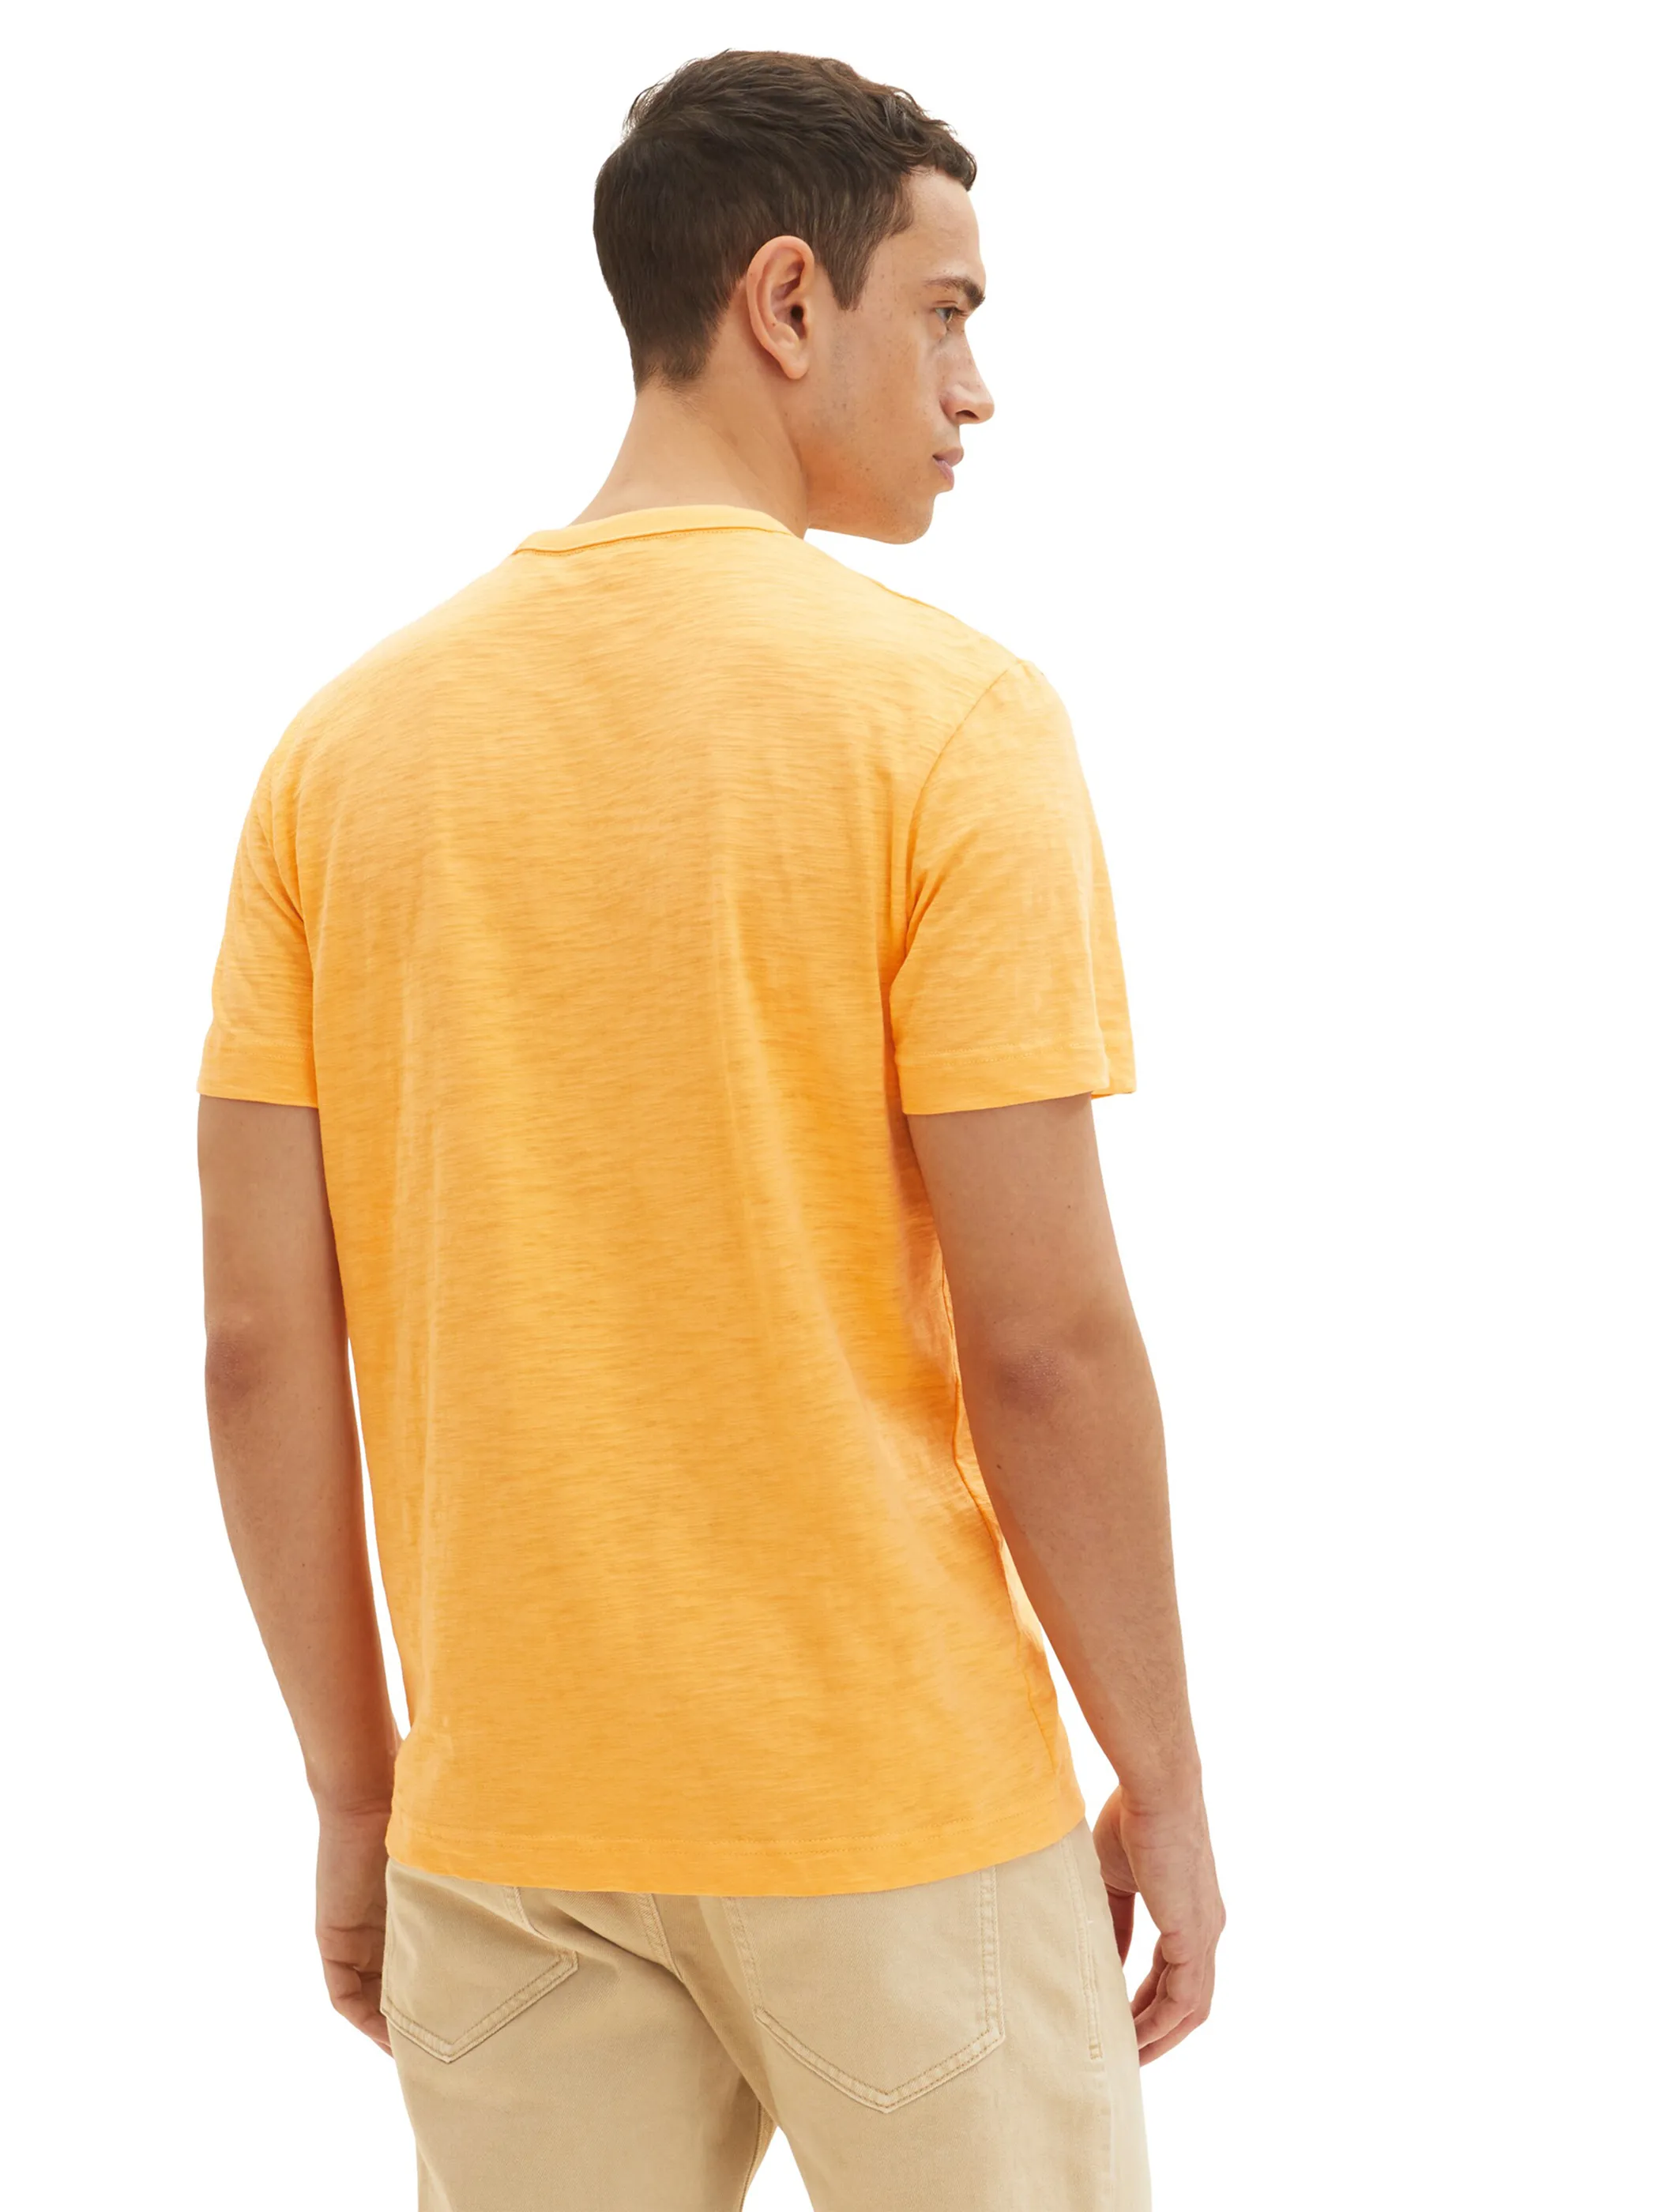 Tom Tailor 1035615 basic crewneck t-shirt Orange 874967 22225 2